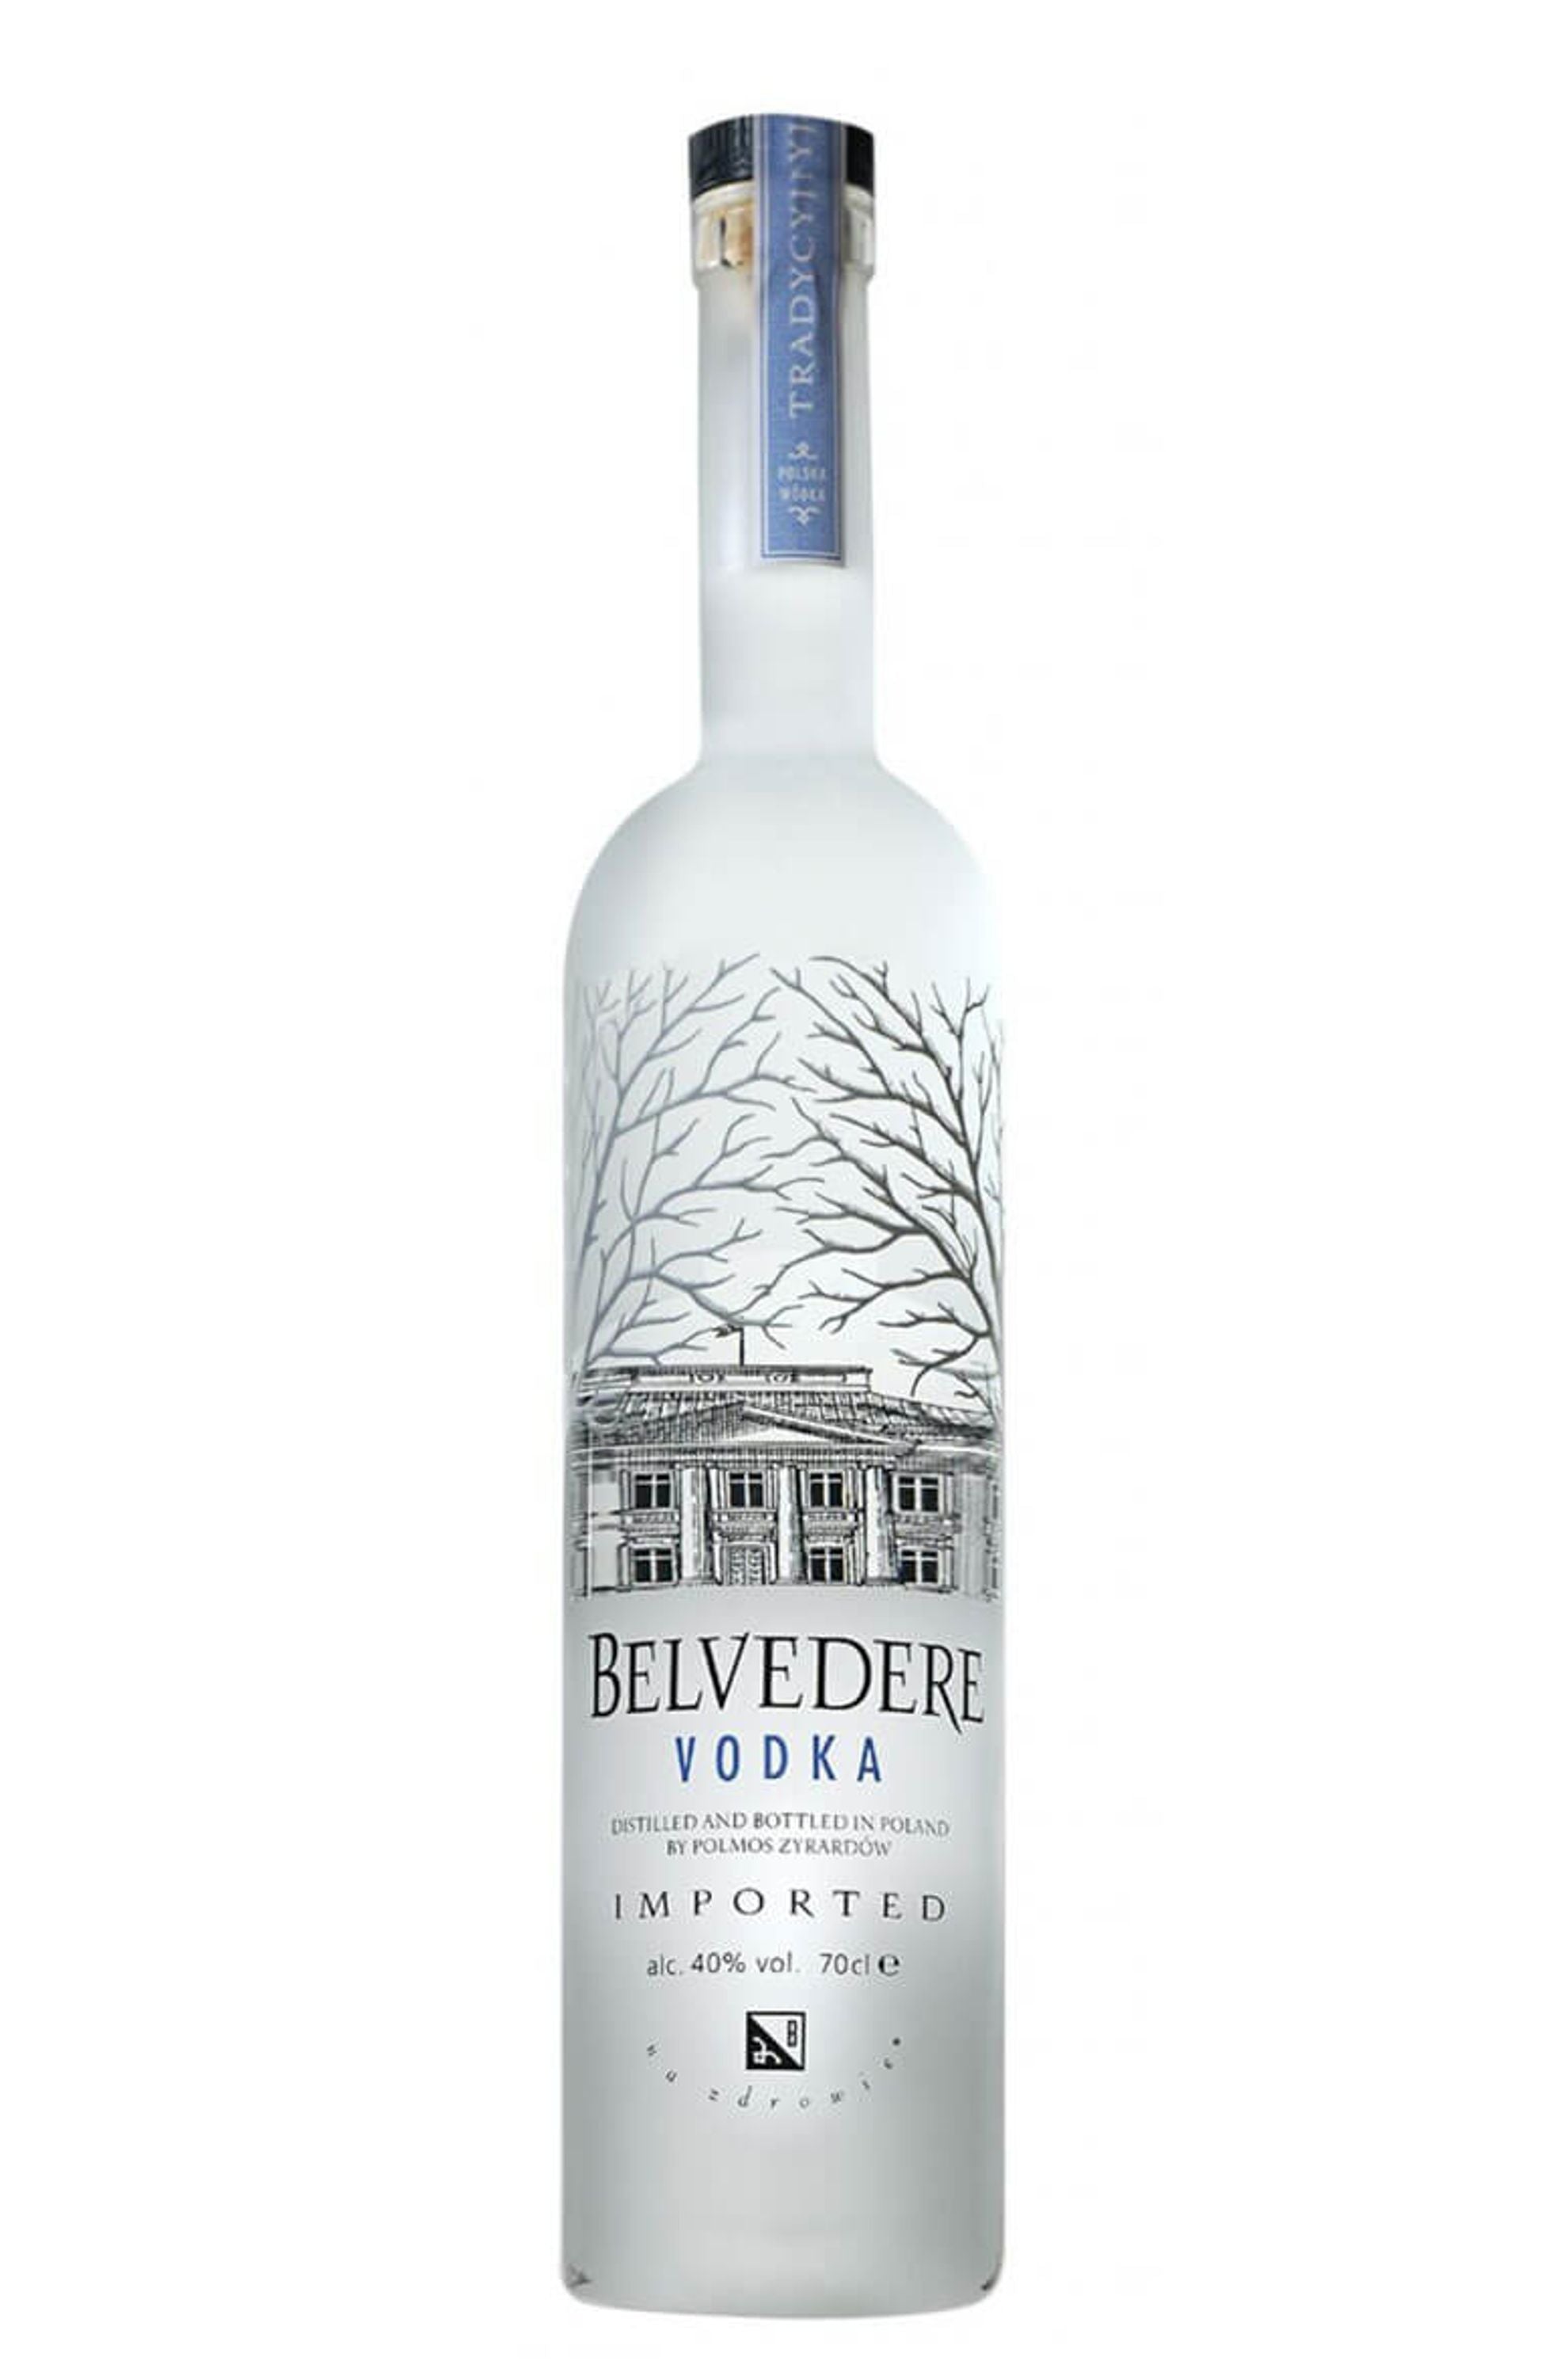 Belvedere Vodka 0,7l, alk. 40 tilavuusprosenttia, vodka, Puola